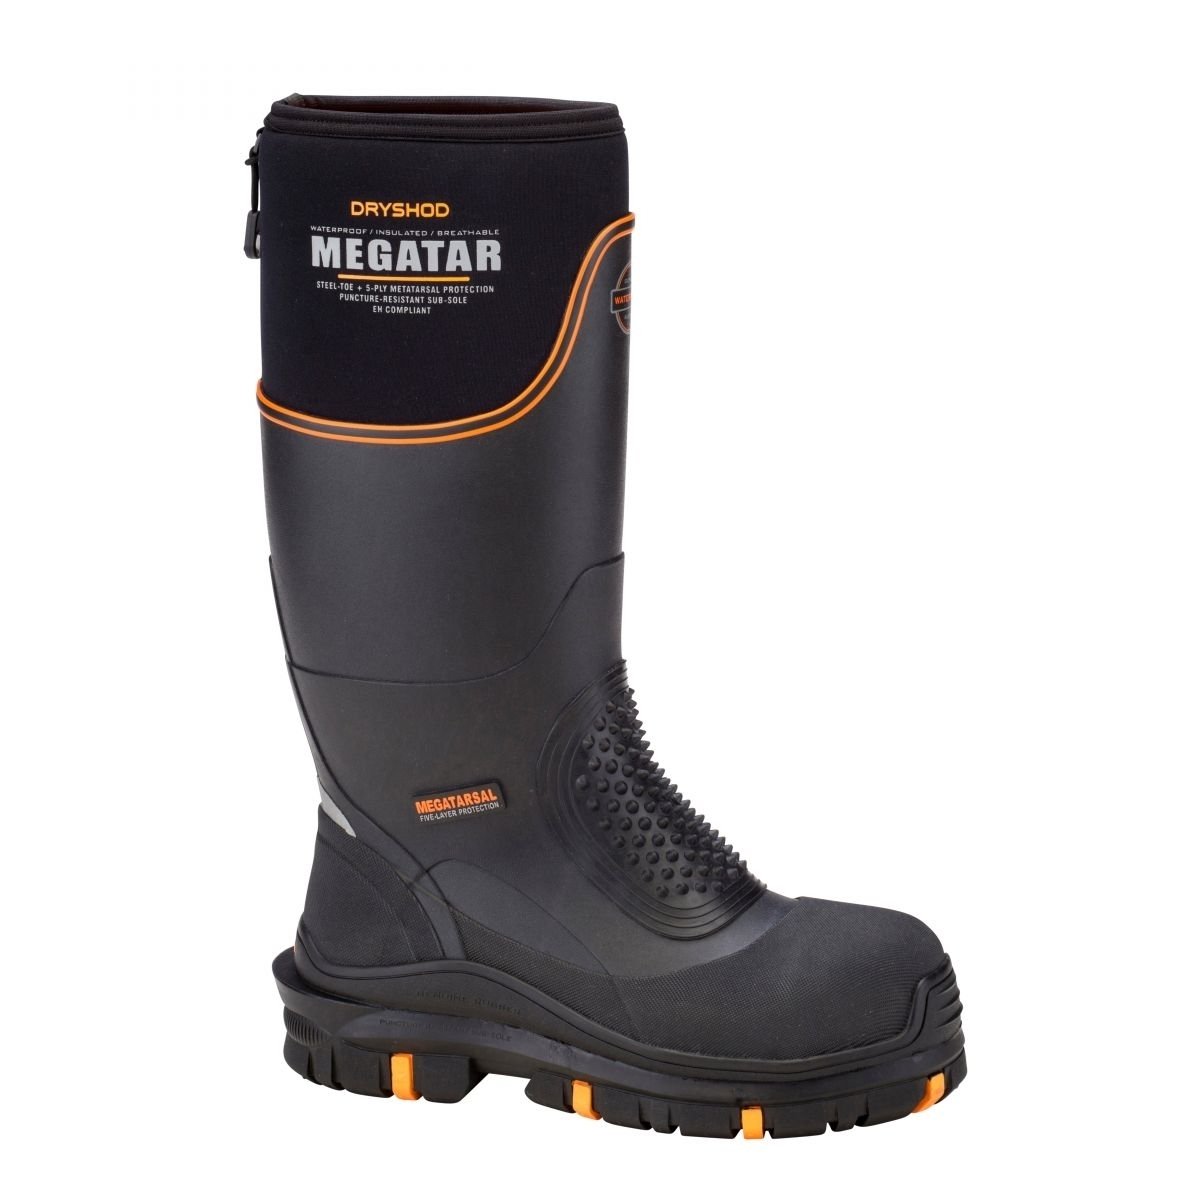 Dryshod Men's Megatar Steel Toe Metatarsal Guard Work Boot Black - MEG-MH-BK ONE SIZE BLACK/ORANGE - BLACK/ORANGE, 14